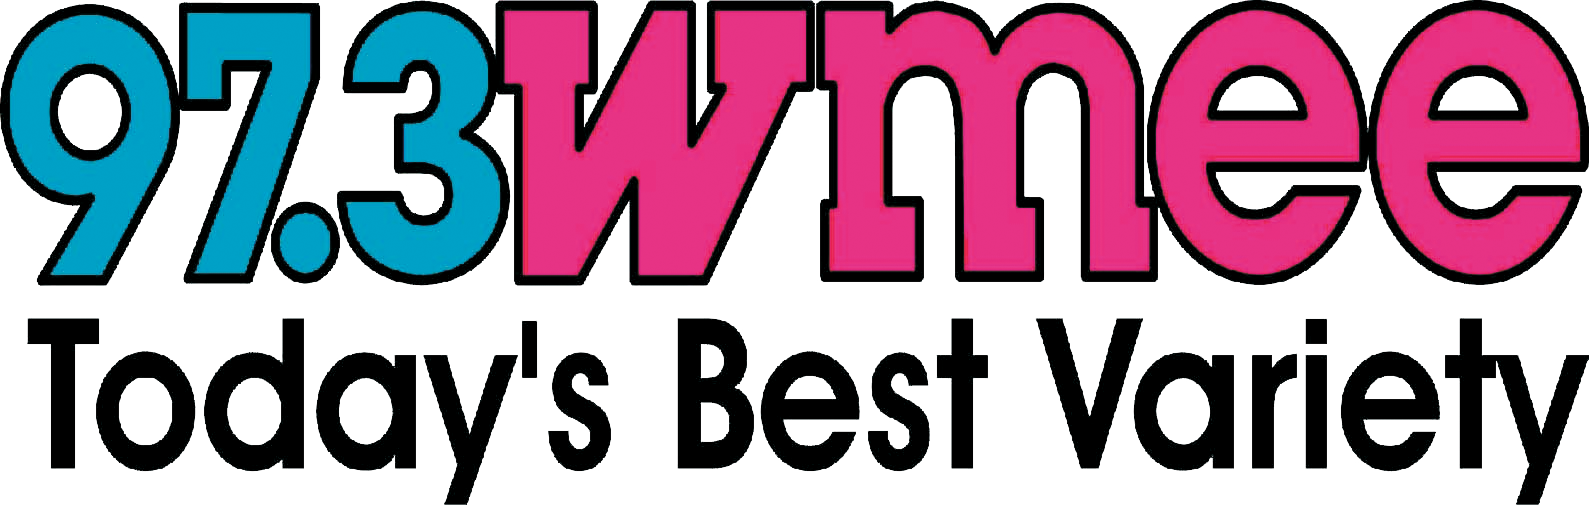 WMEE09 logo